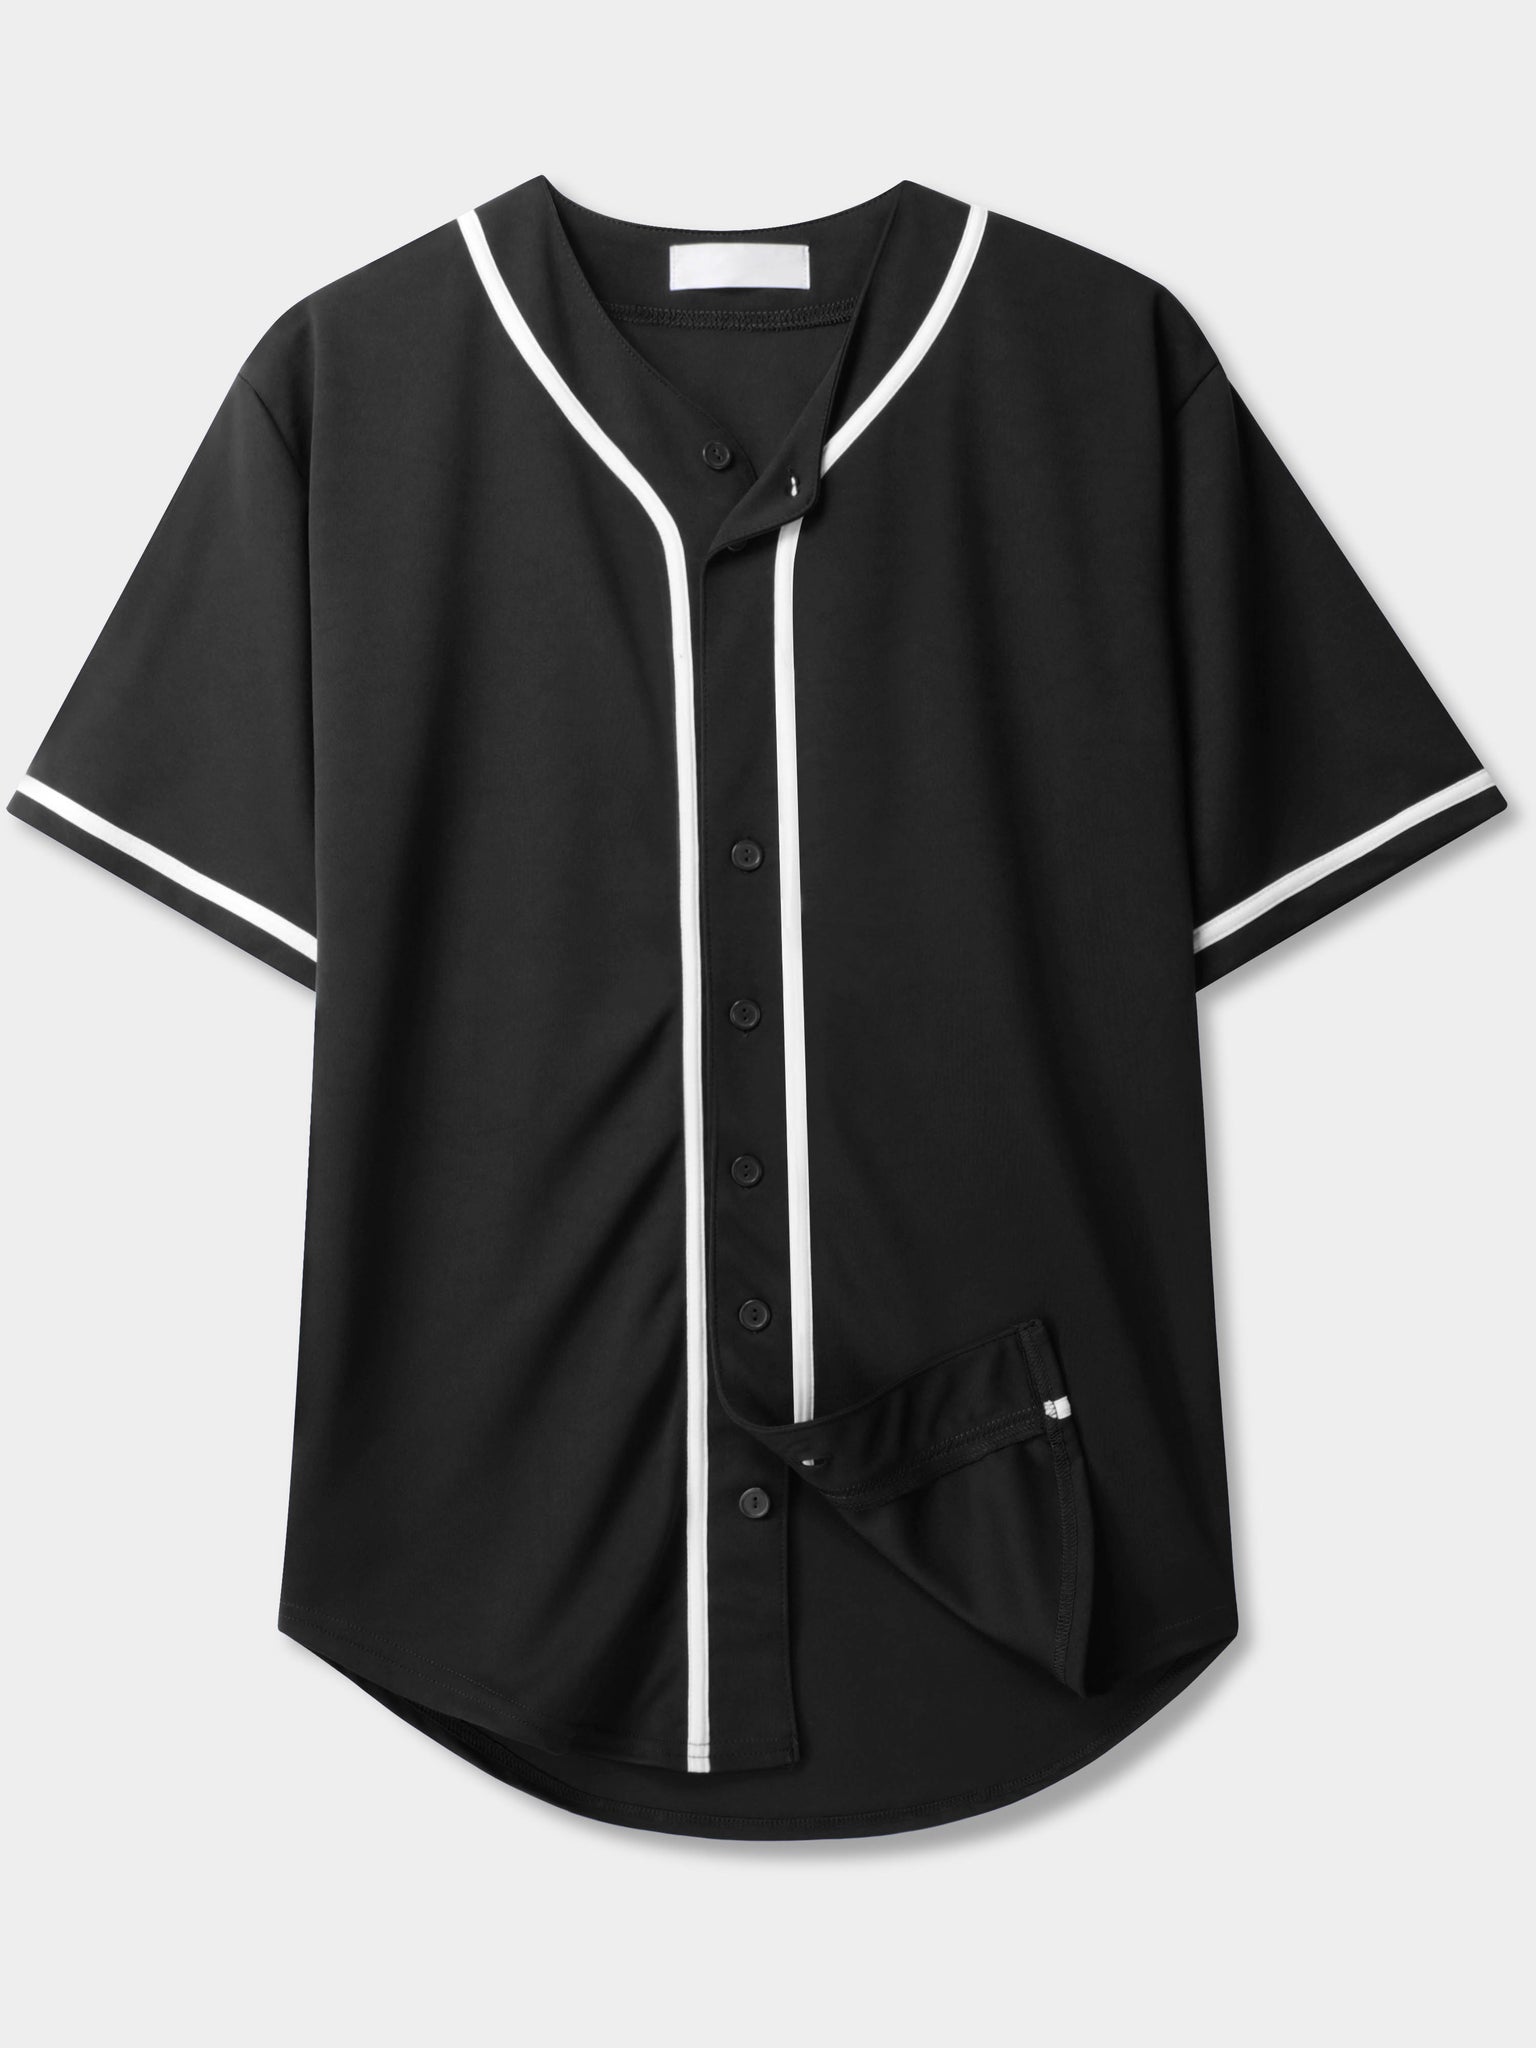 Half sleeves Plain Baseball jersey